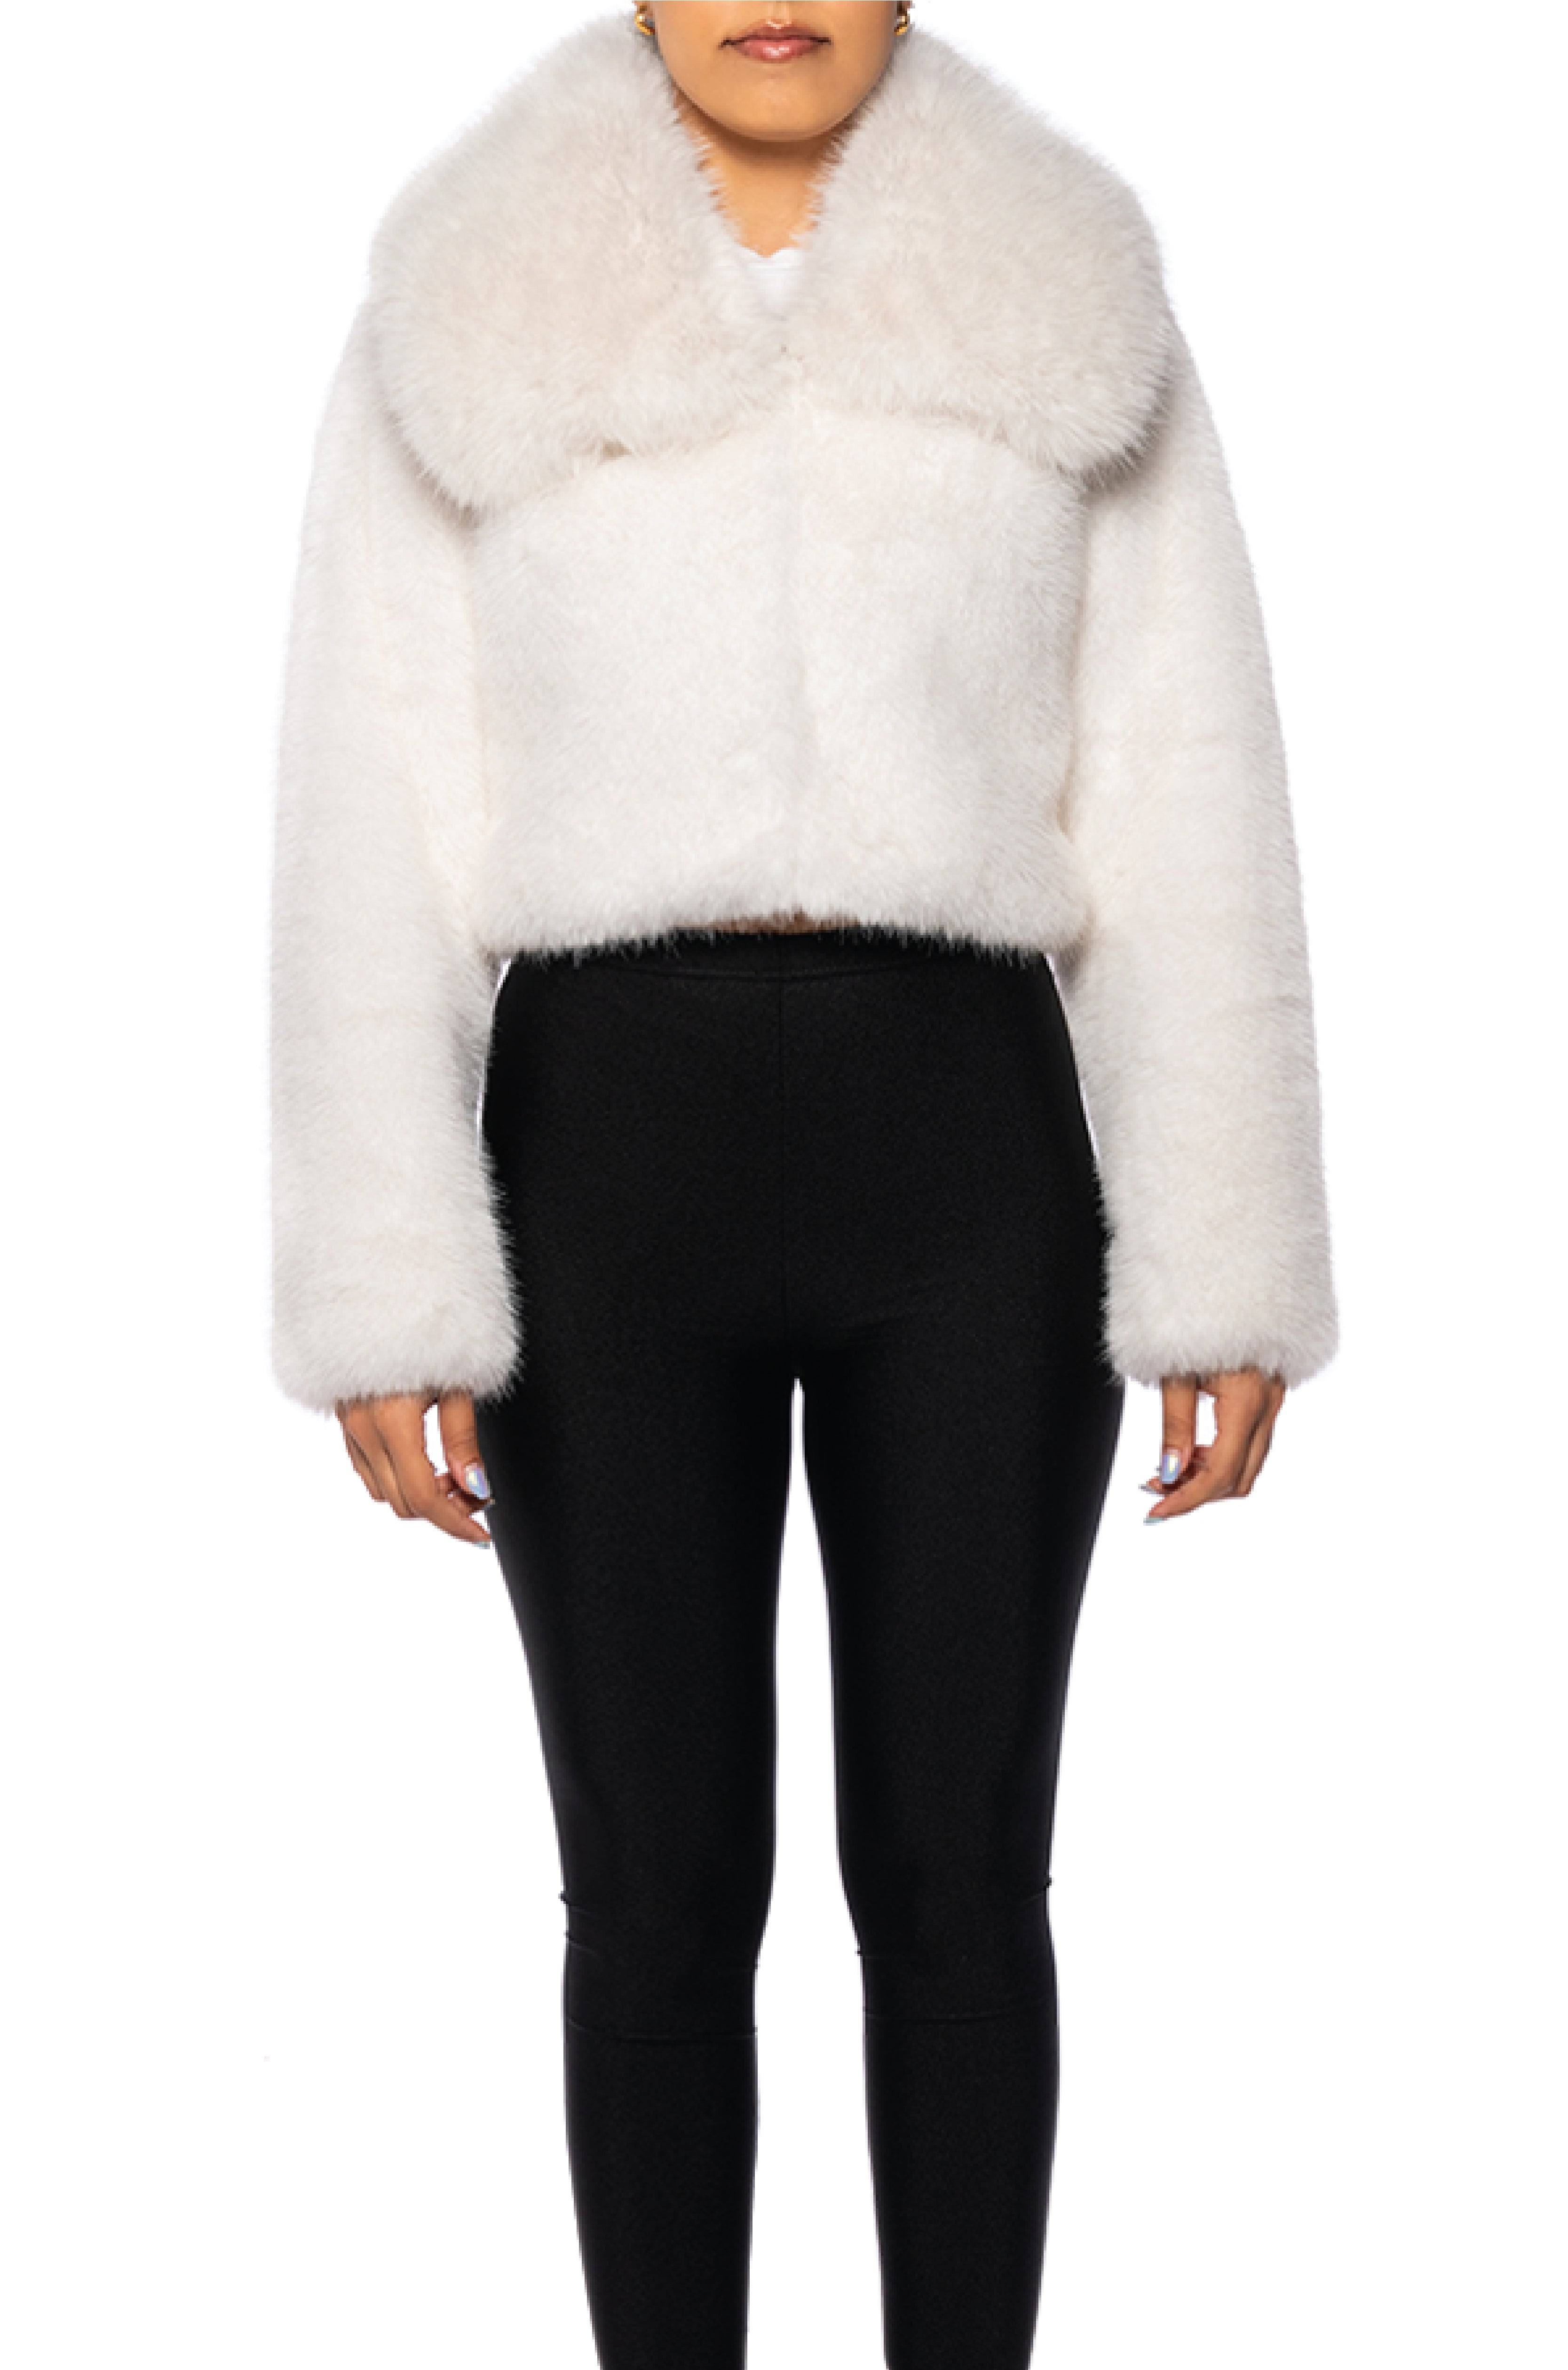 Stylish White Faux Fur Jacket for Fall | Image